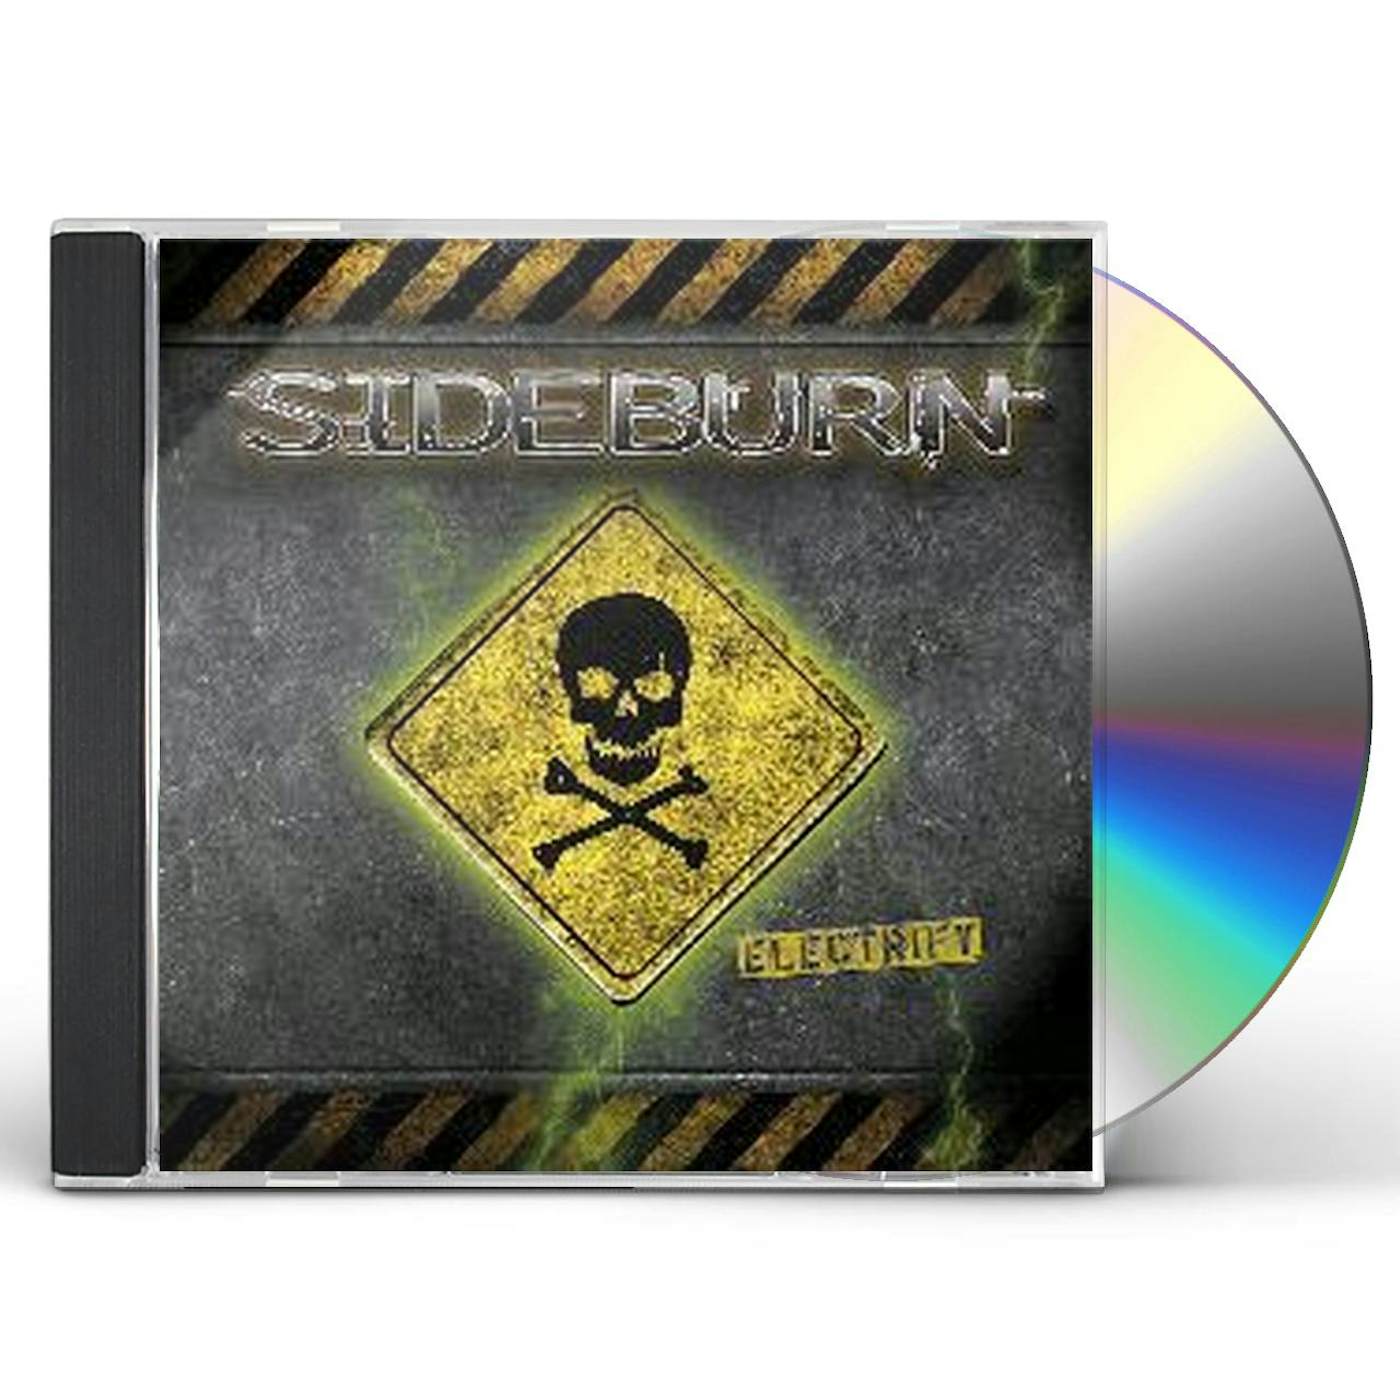 Sideburn ELECTRIFY CD CD